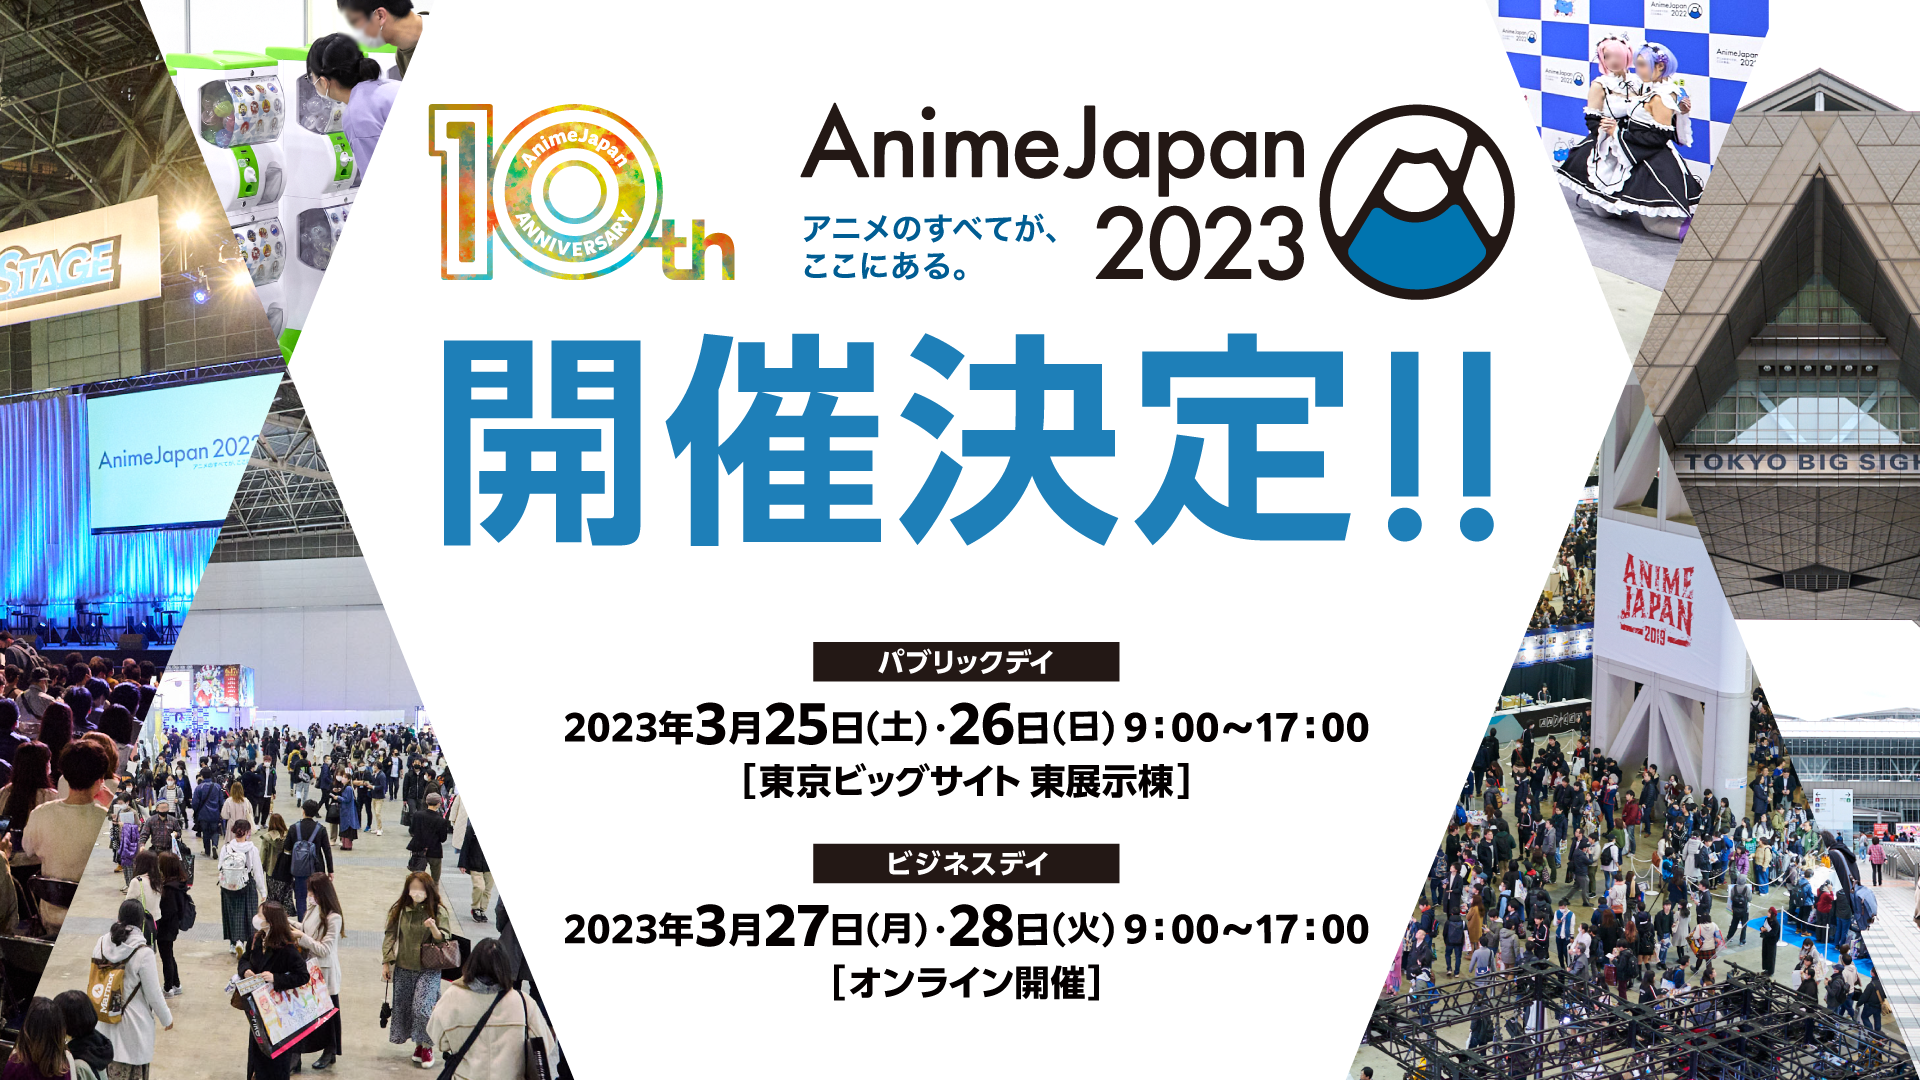 AnimeJapan poster